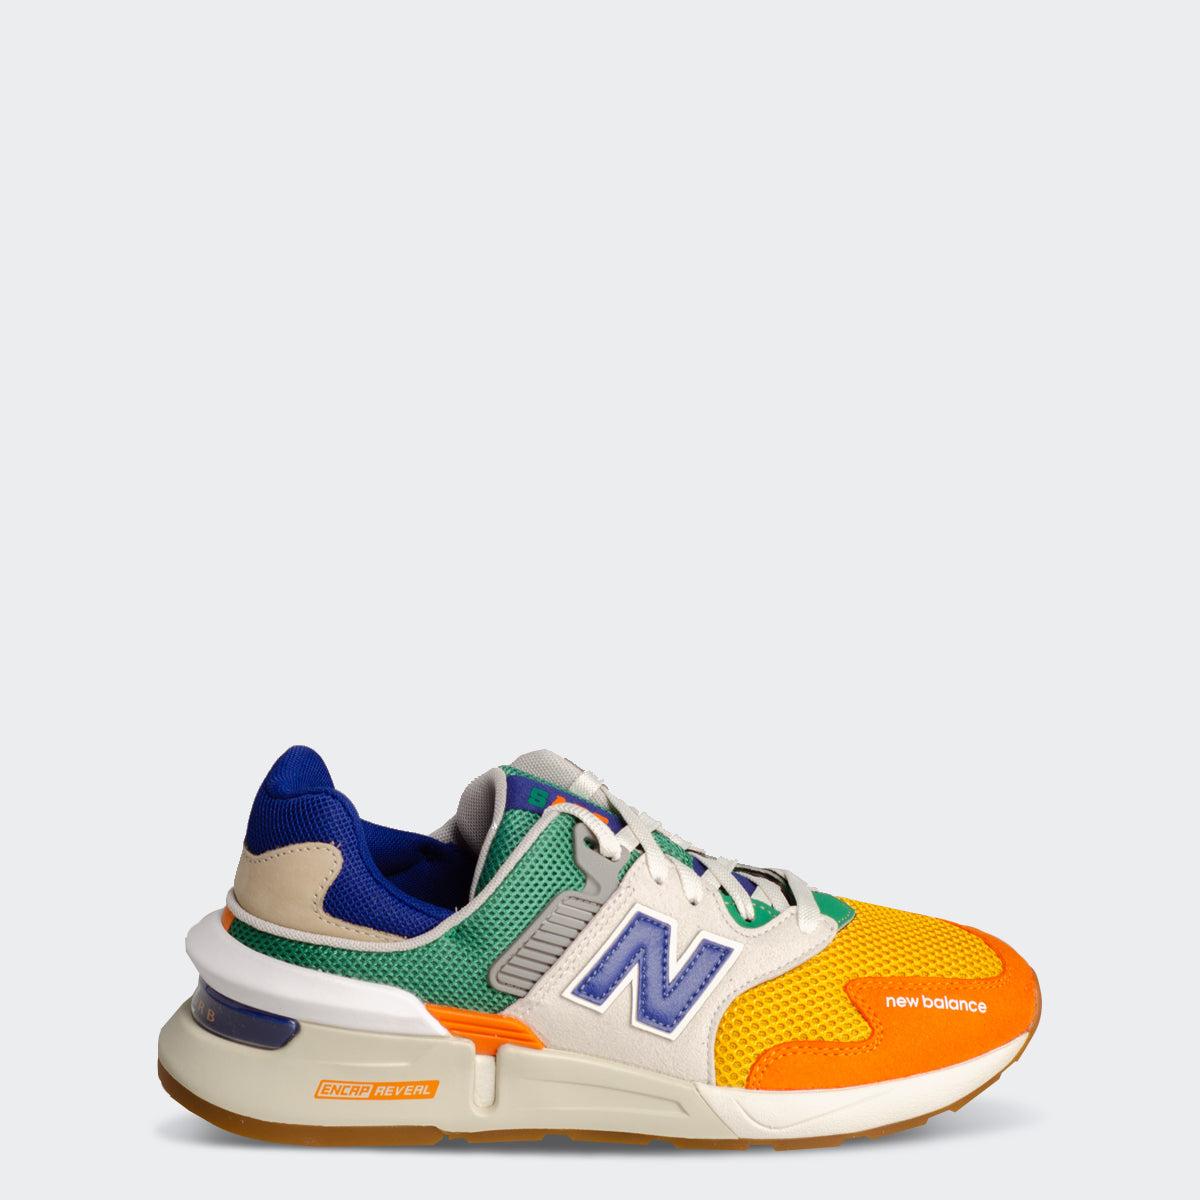 New Balance 997 Sport Shoes Multicolor 